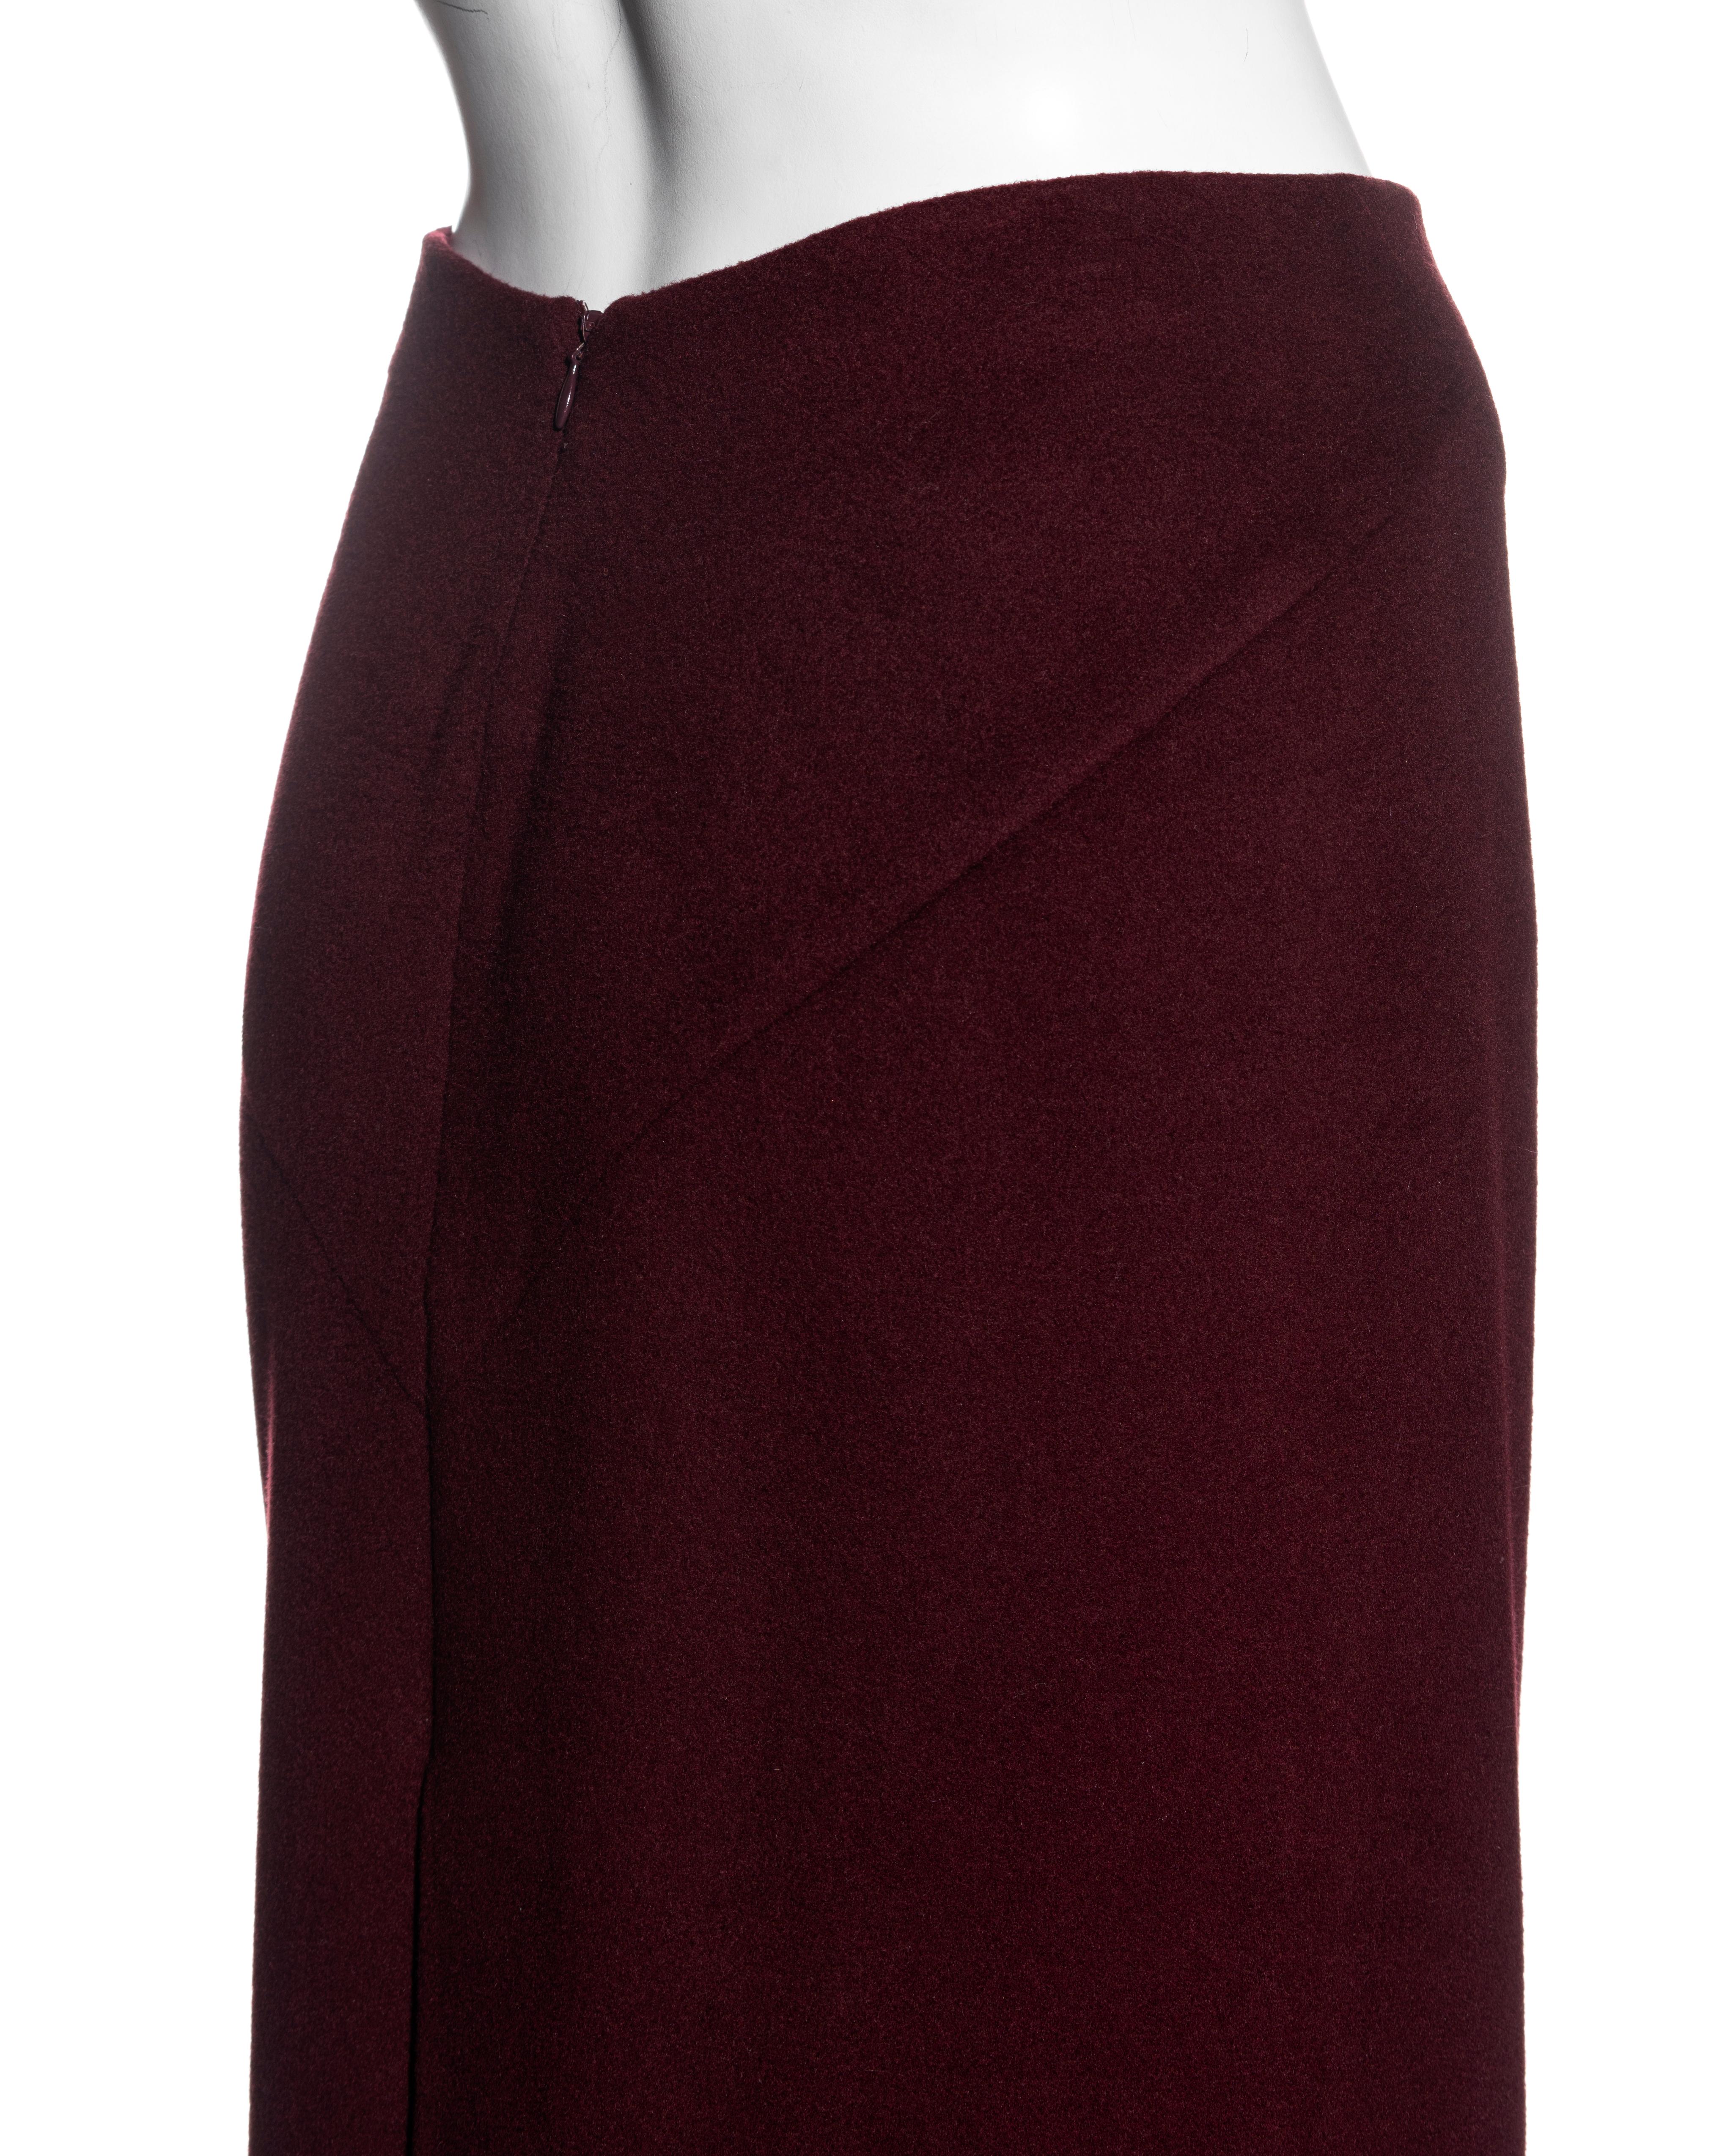 Alexander McQueen burgundy cashmere embellished  'Joan' skirt, fw 1998 For Sale 2